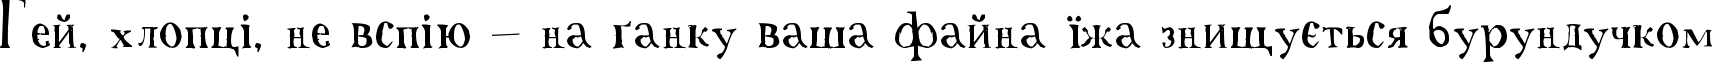 Пример написания шрифтом A Font with Serifs текста на украинском